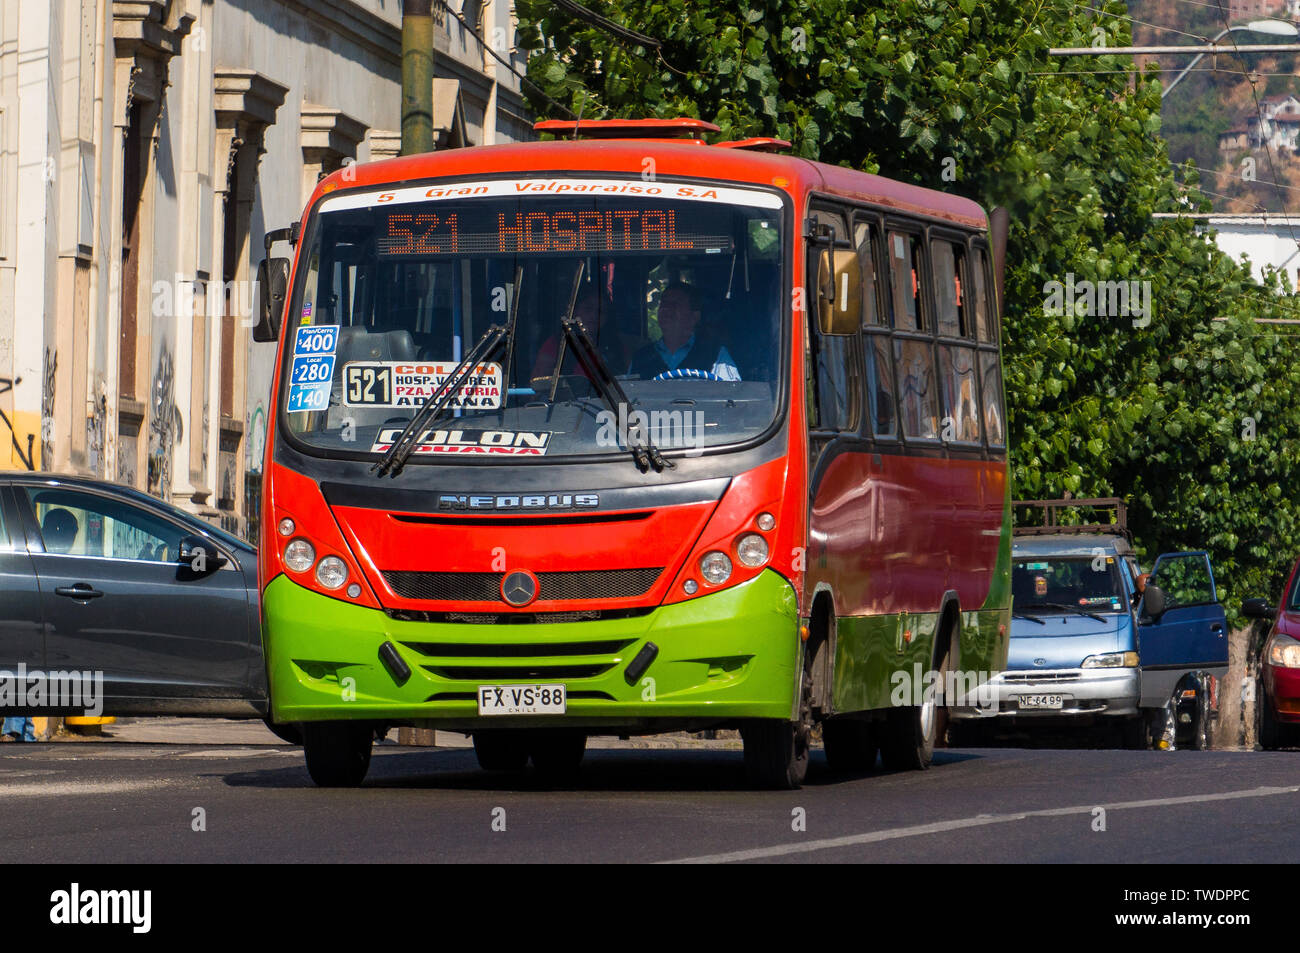 VALPARAISO, CHILE - One of the TMV (Transporte Metropolitano de Valparaiso) buses Stock Photo